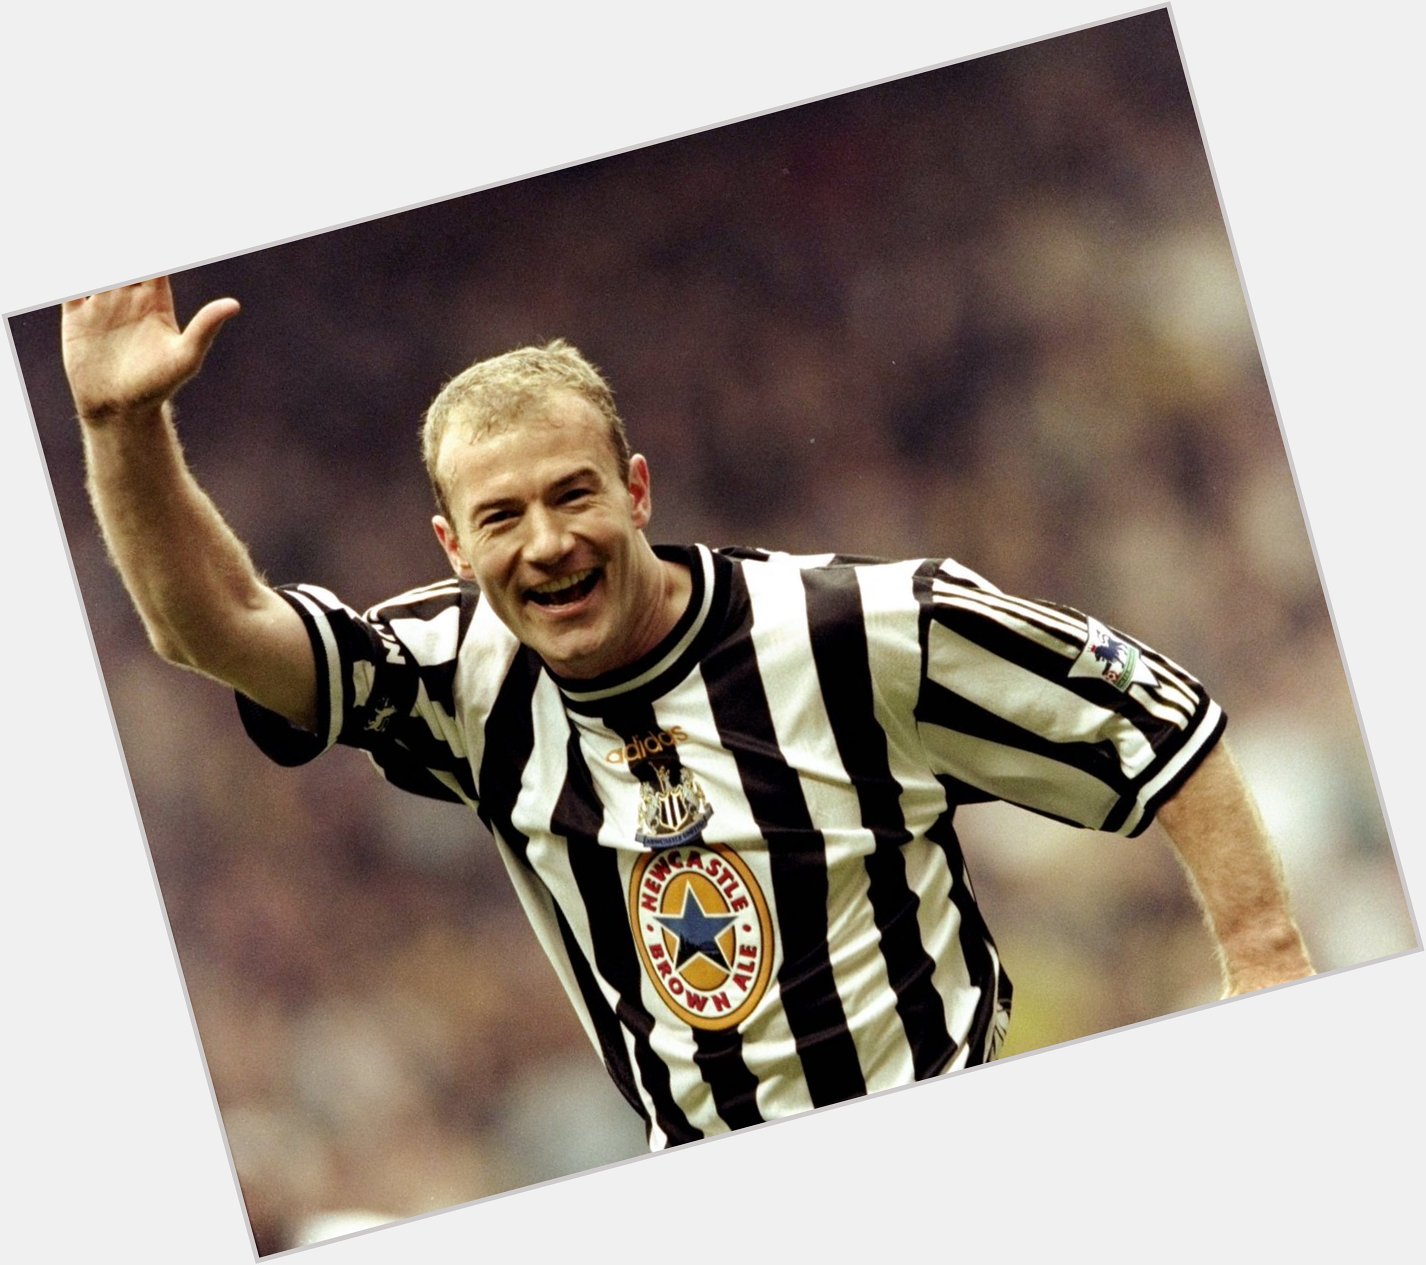  Happy birthday, Alan Shearer! 441 games  260 goals 11 hat-tricks All-time PL leading goalscorer

Legend. 